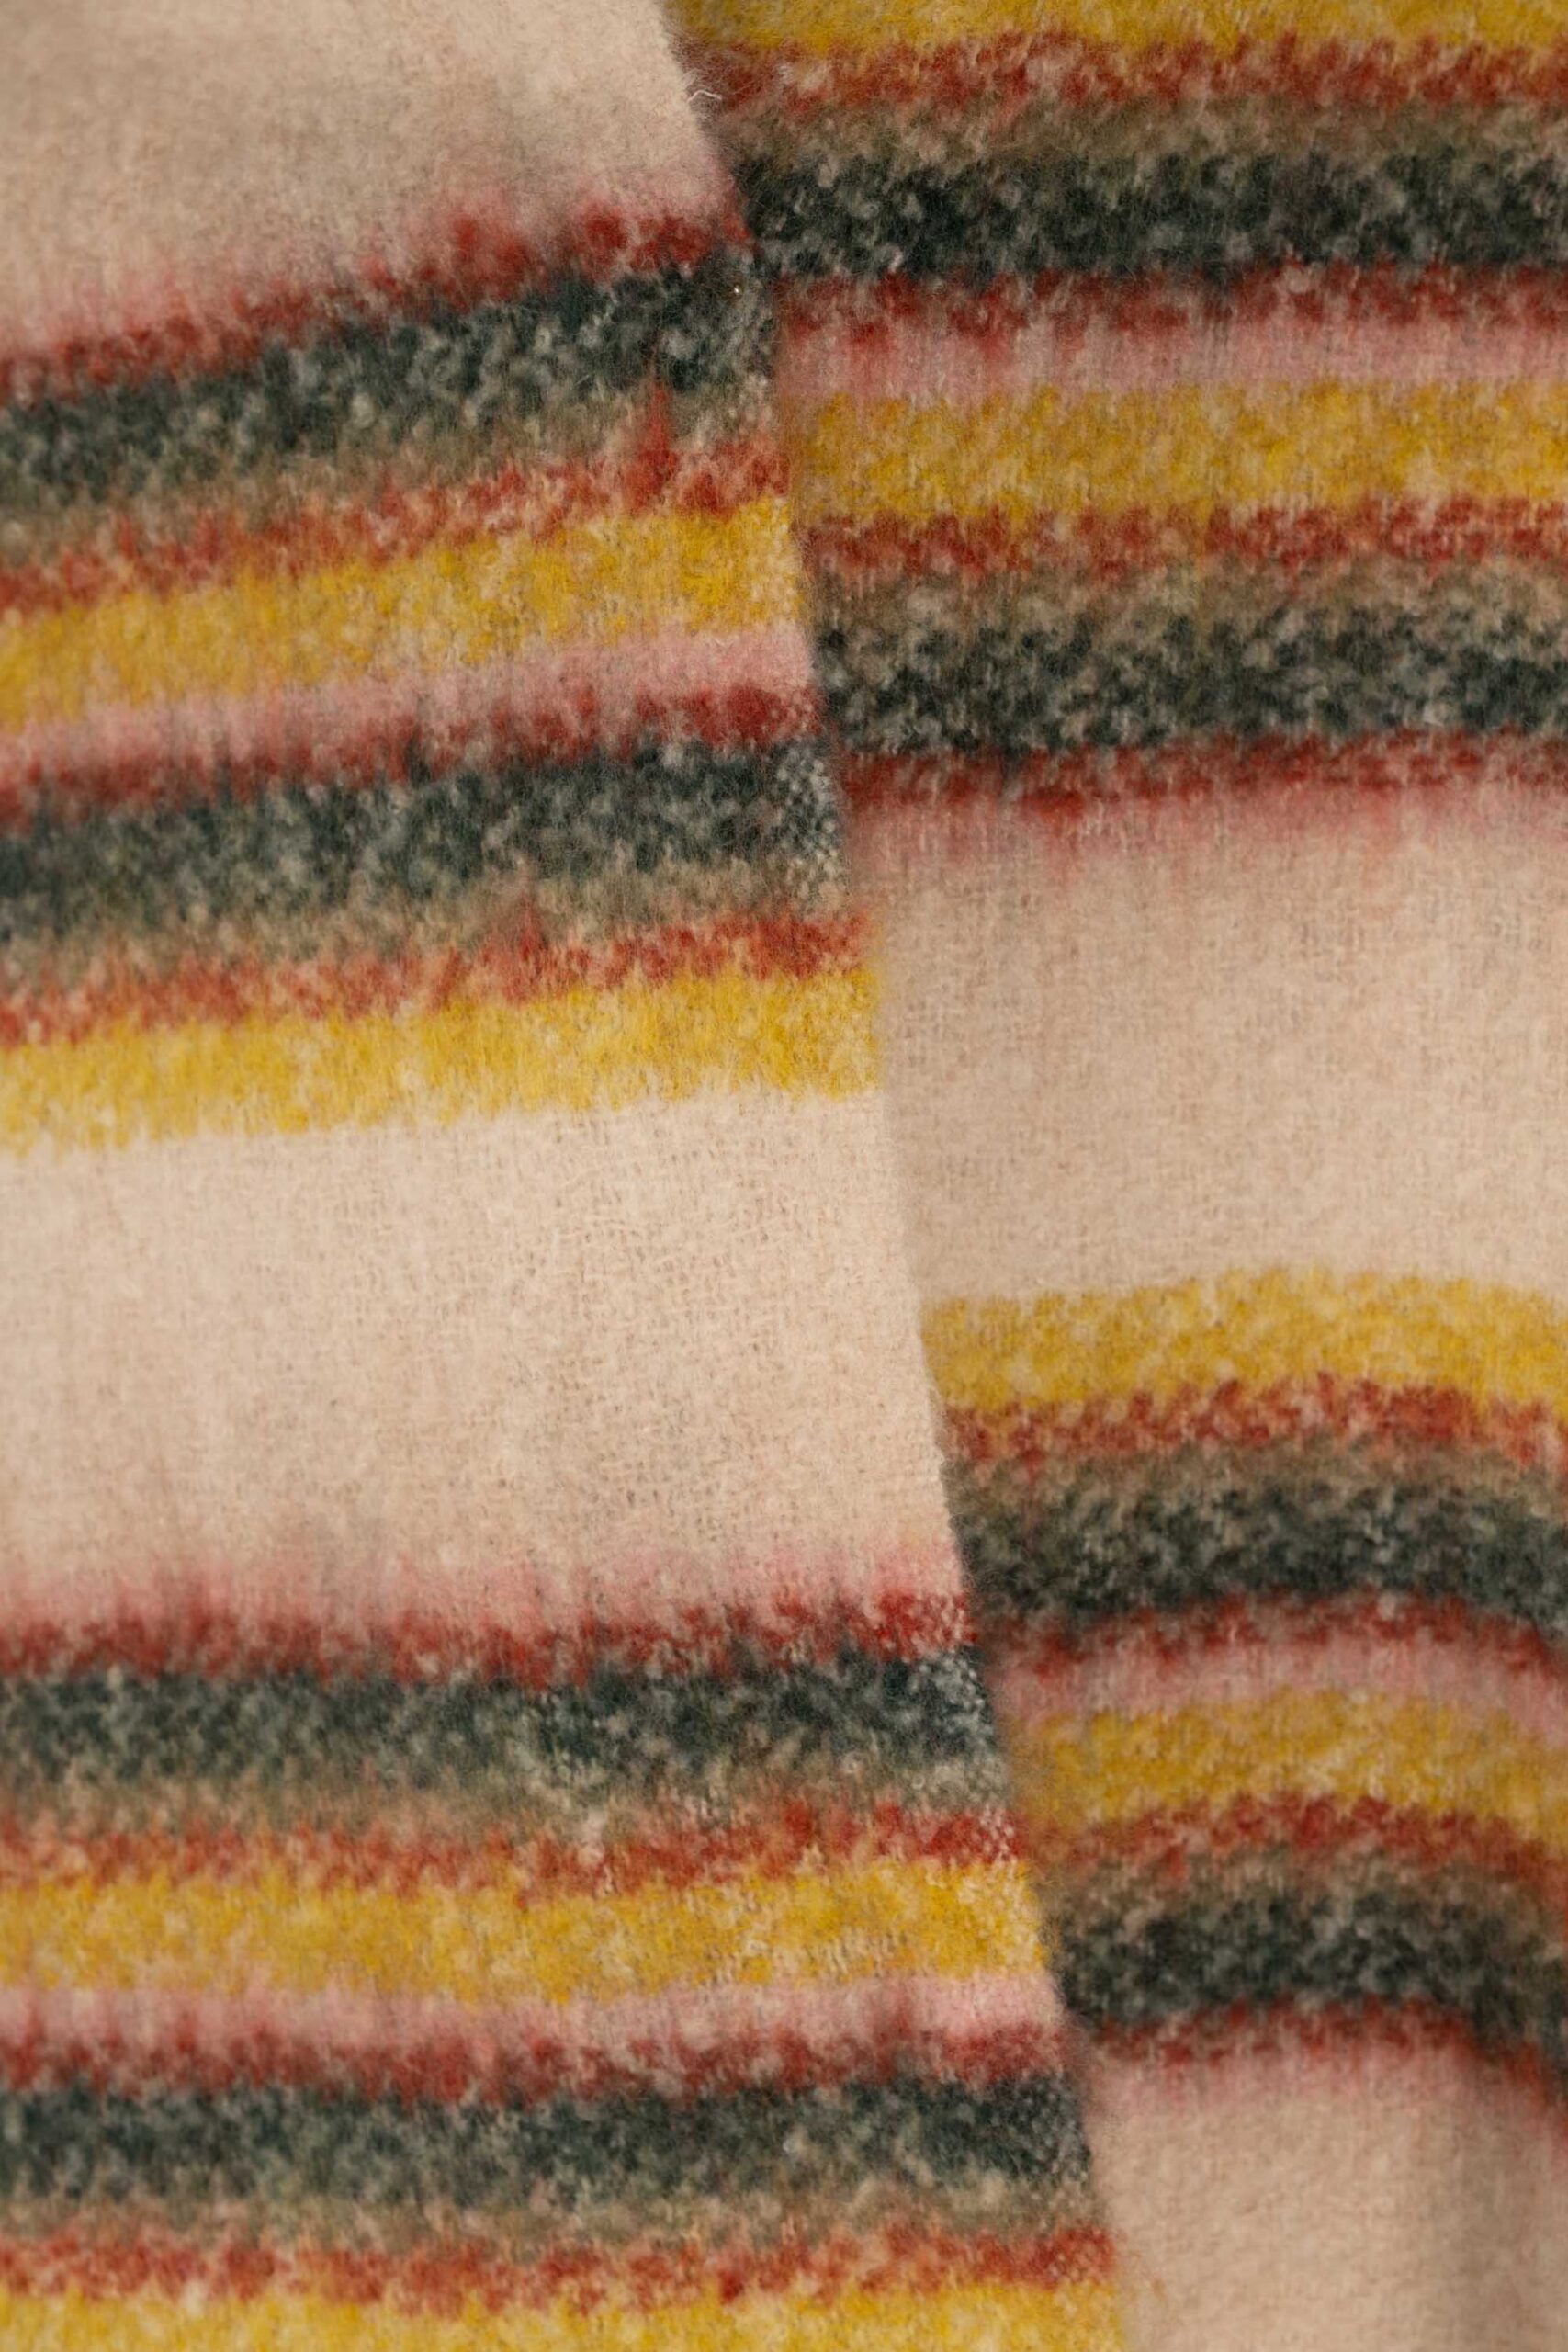 Striped Blanket Shawl with Fringe